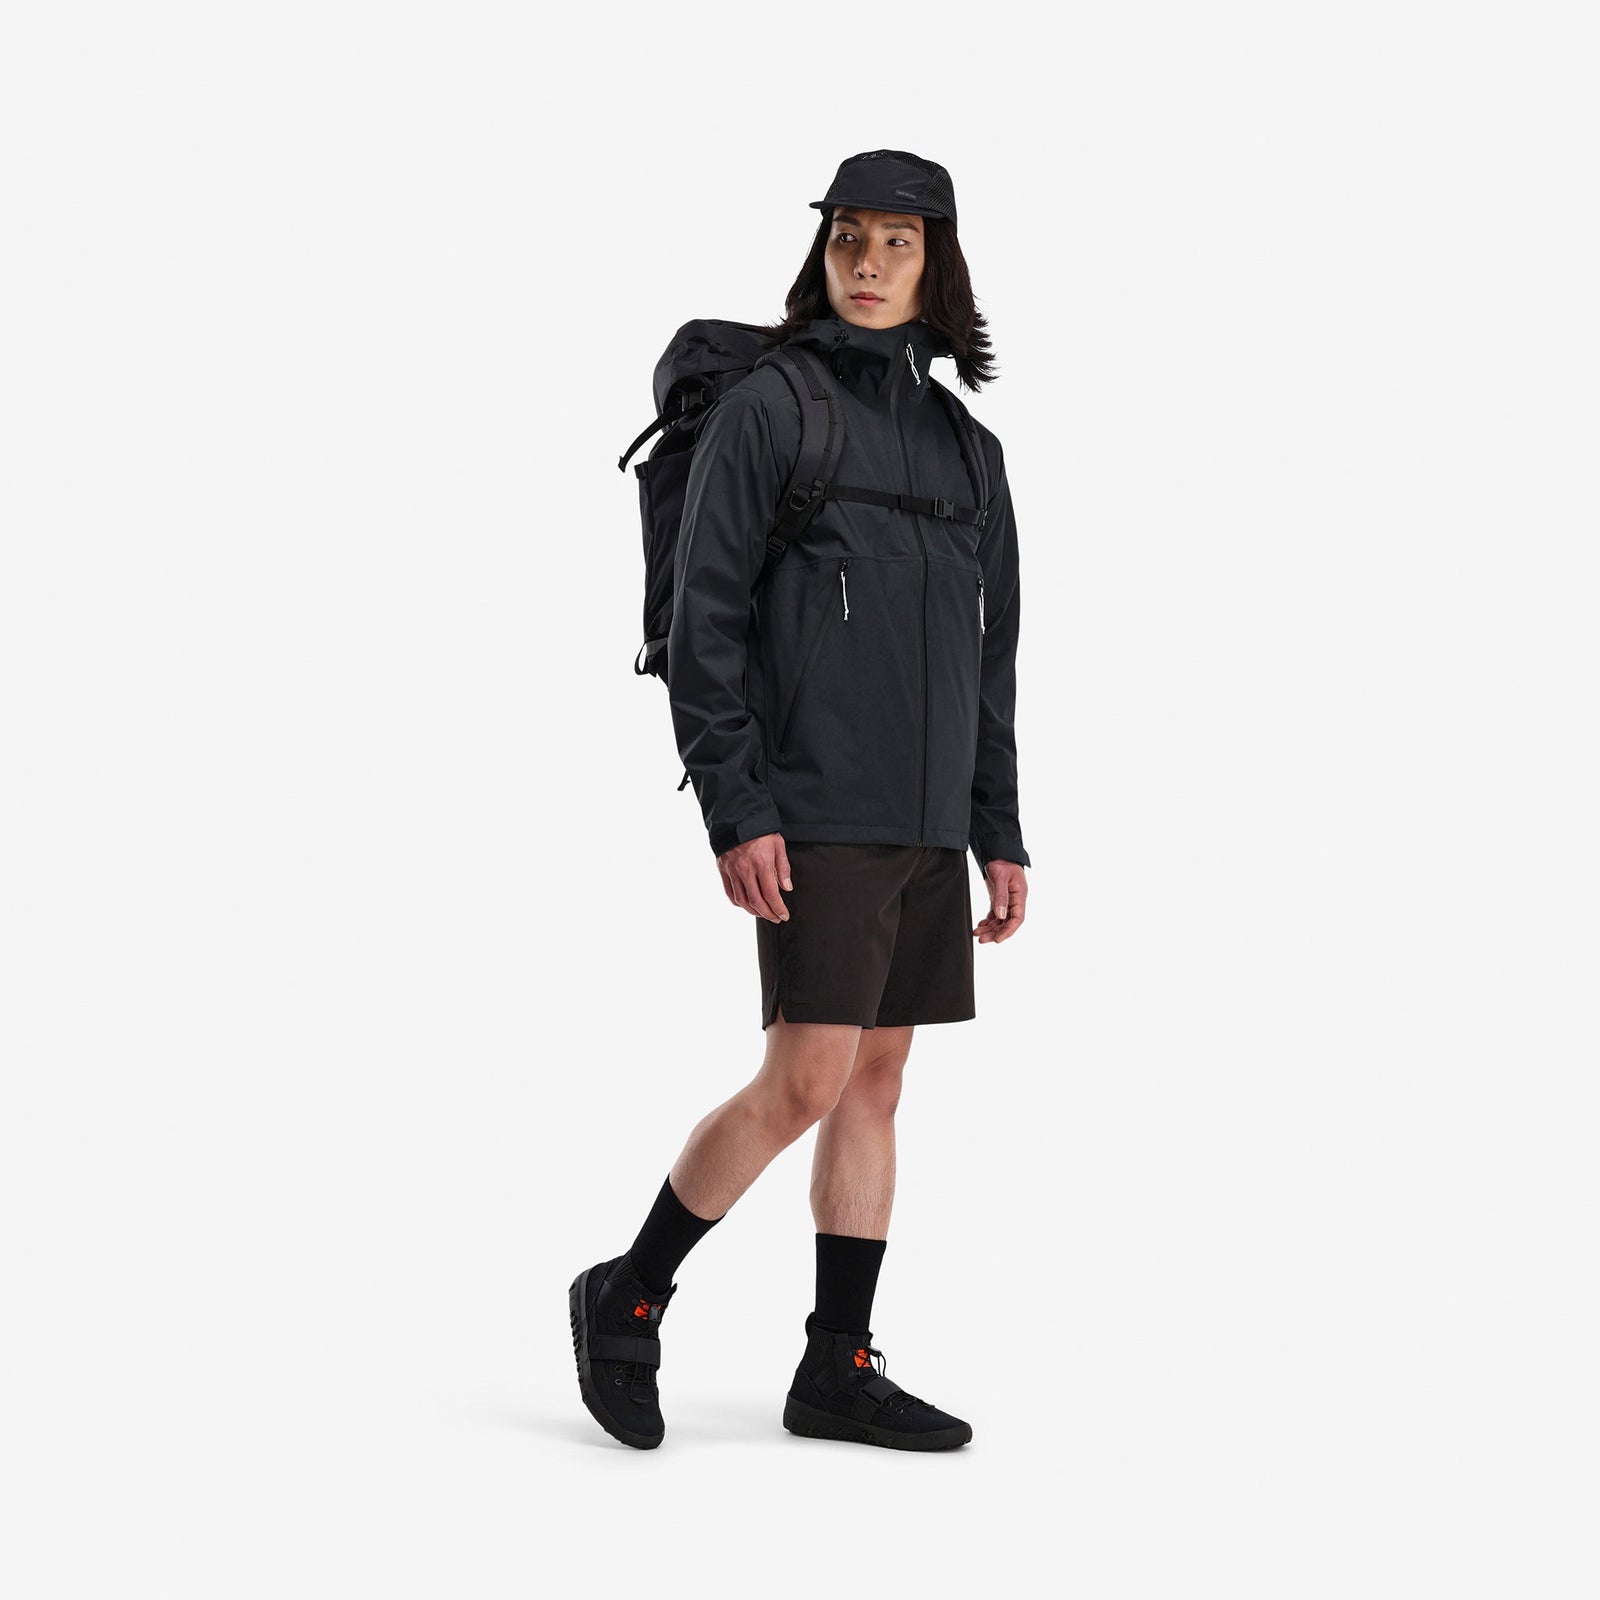 Model wearing Topo Designs Men's Global Jacket packable 10k waterproof rain shell in recycled "black" polyester.